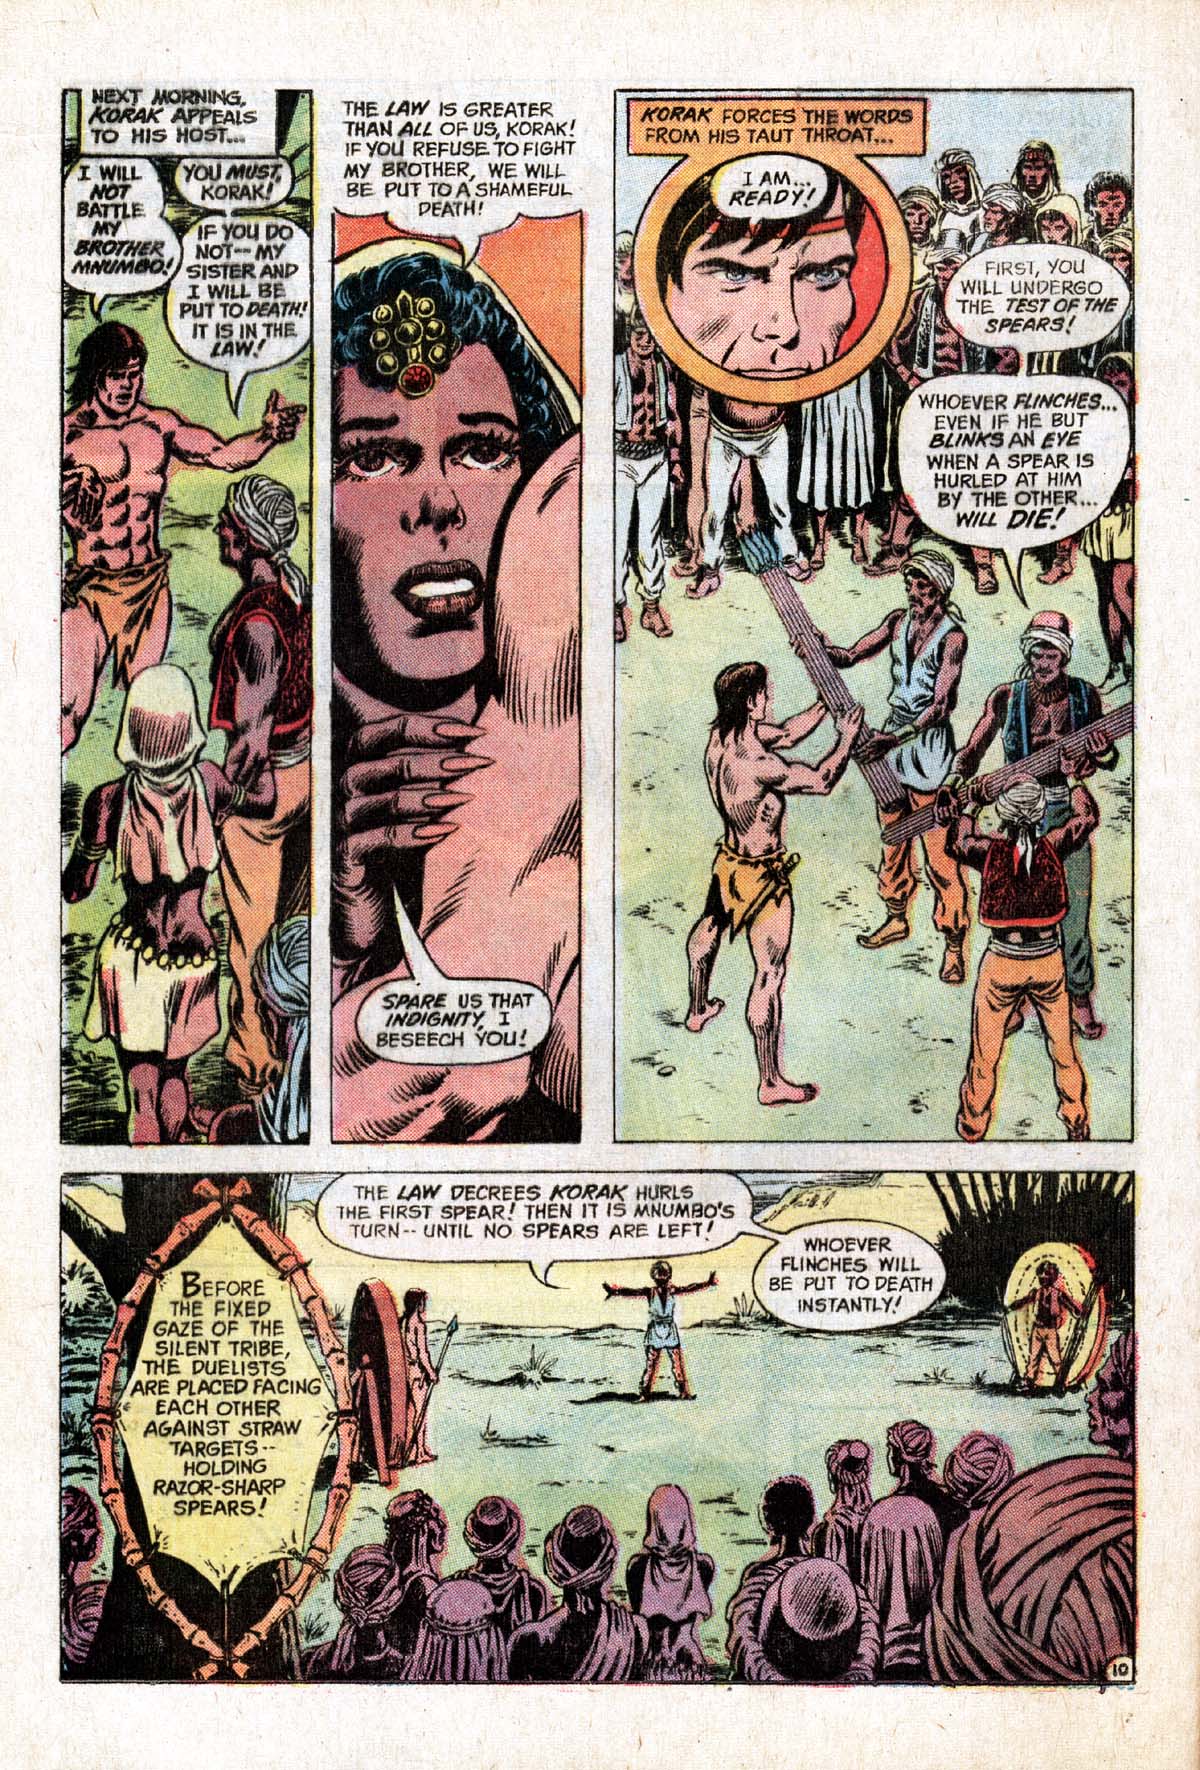 Korak Son Of Tarzan 54 Read All Comics Online